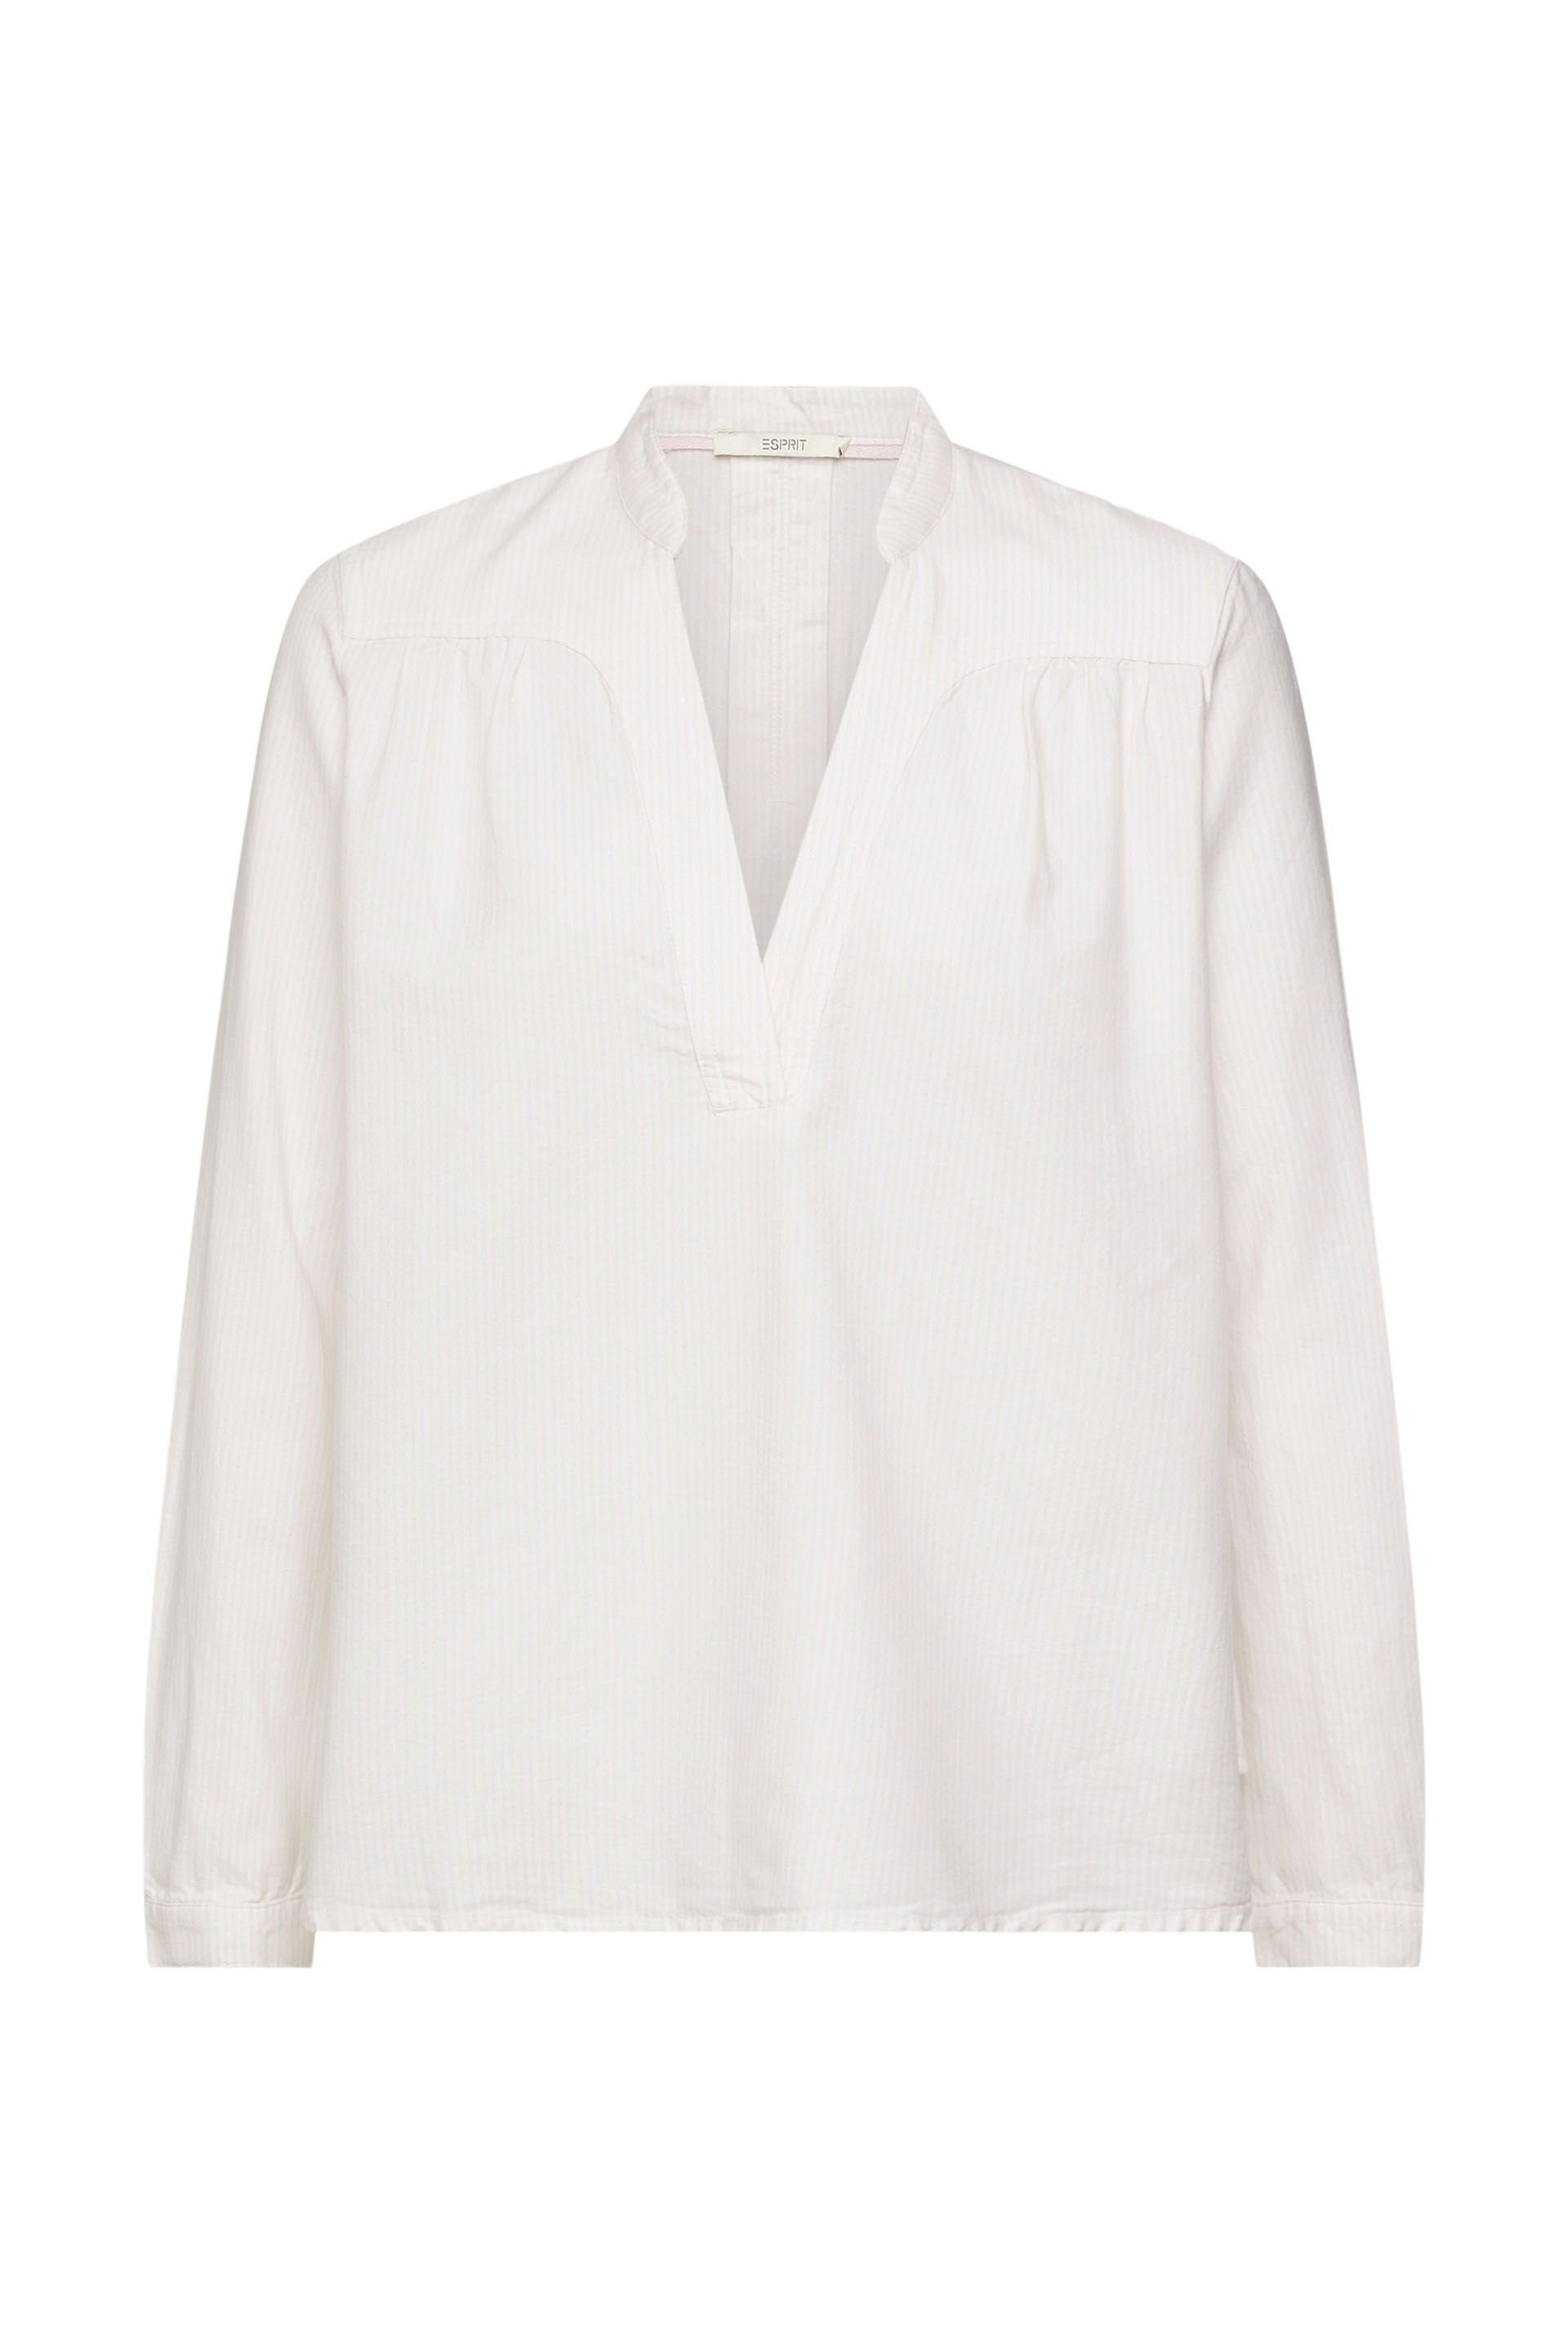 Esprit Langarmhemd off white